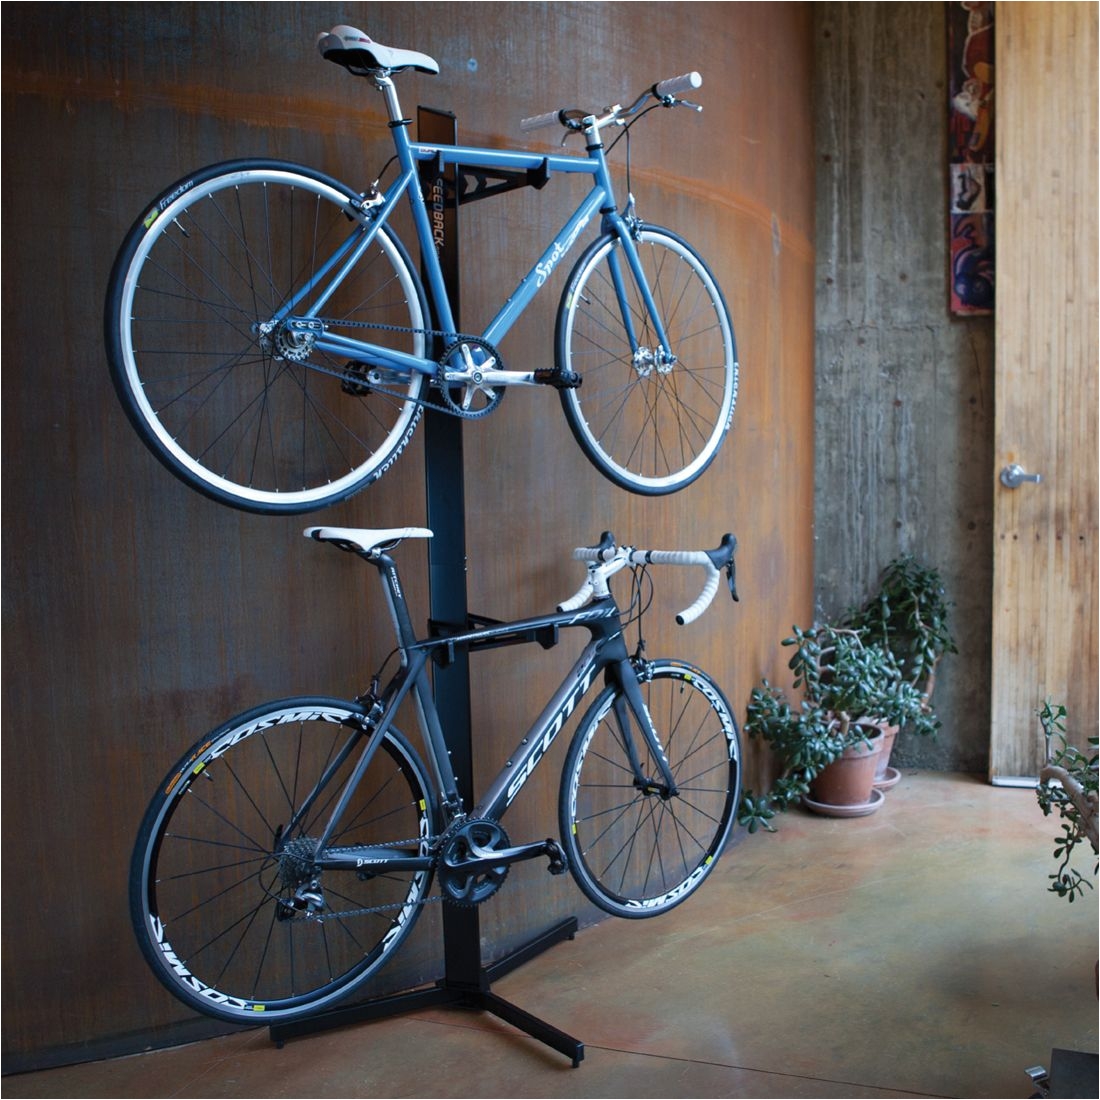 metal home freestanding rack to store and display your bikes bikestorage garagestorage storeyourboard